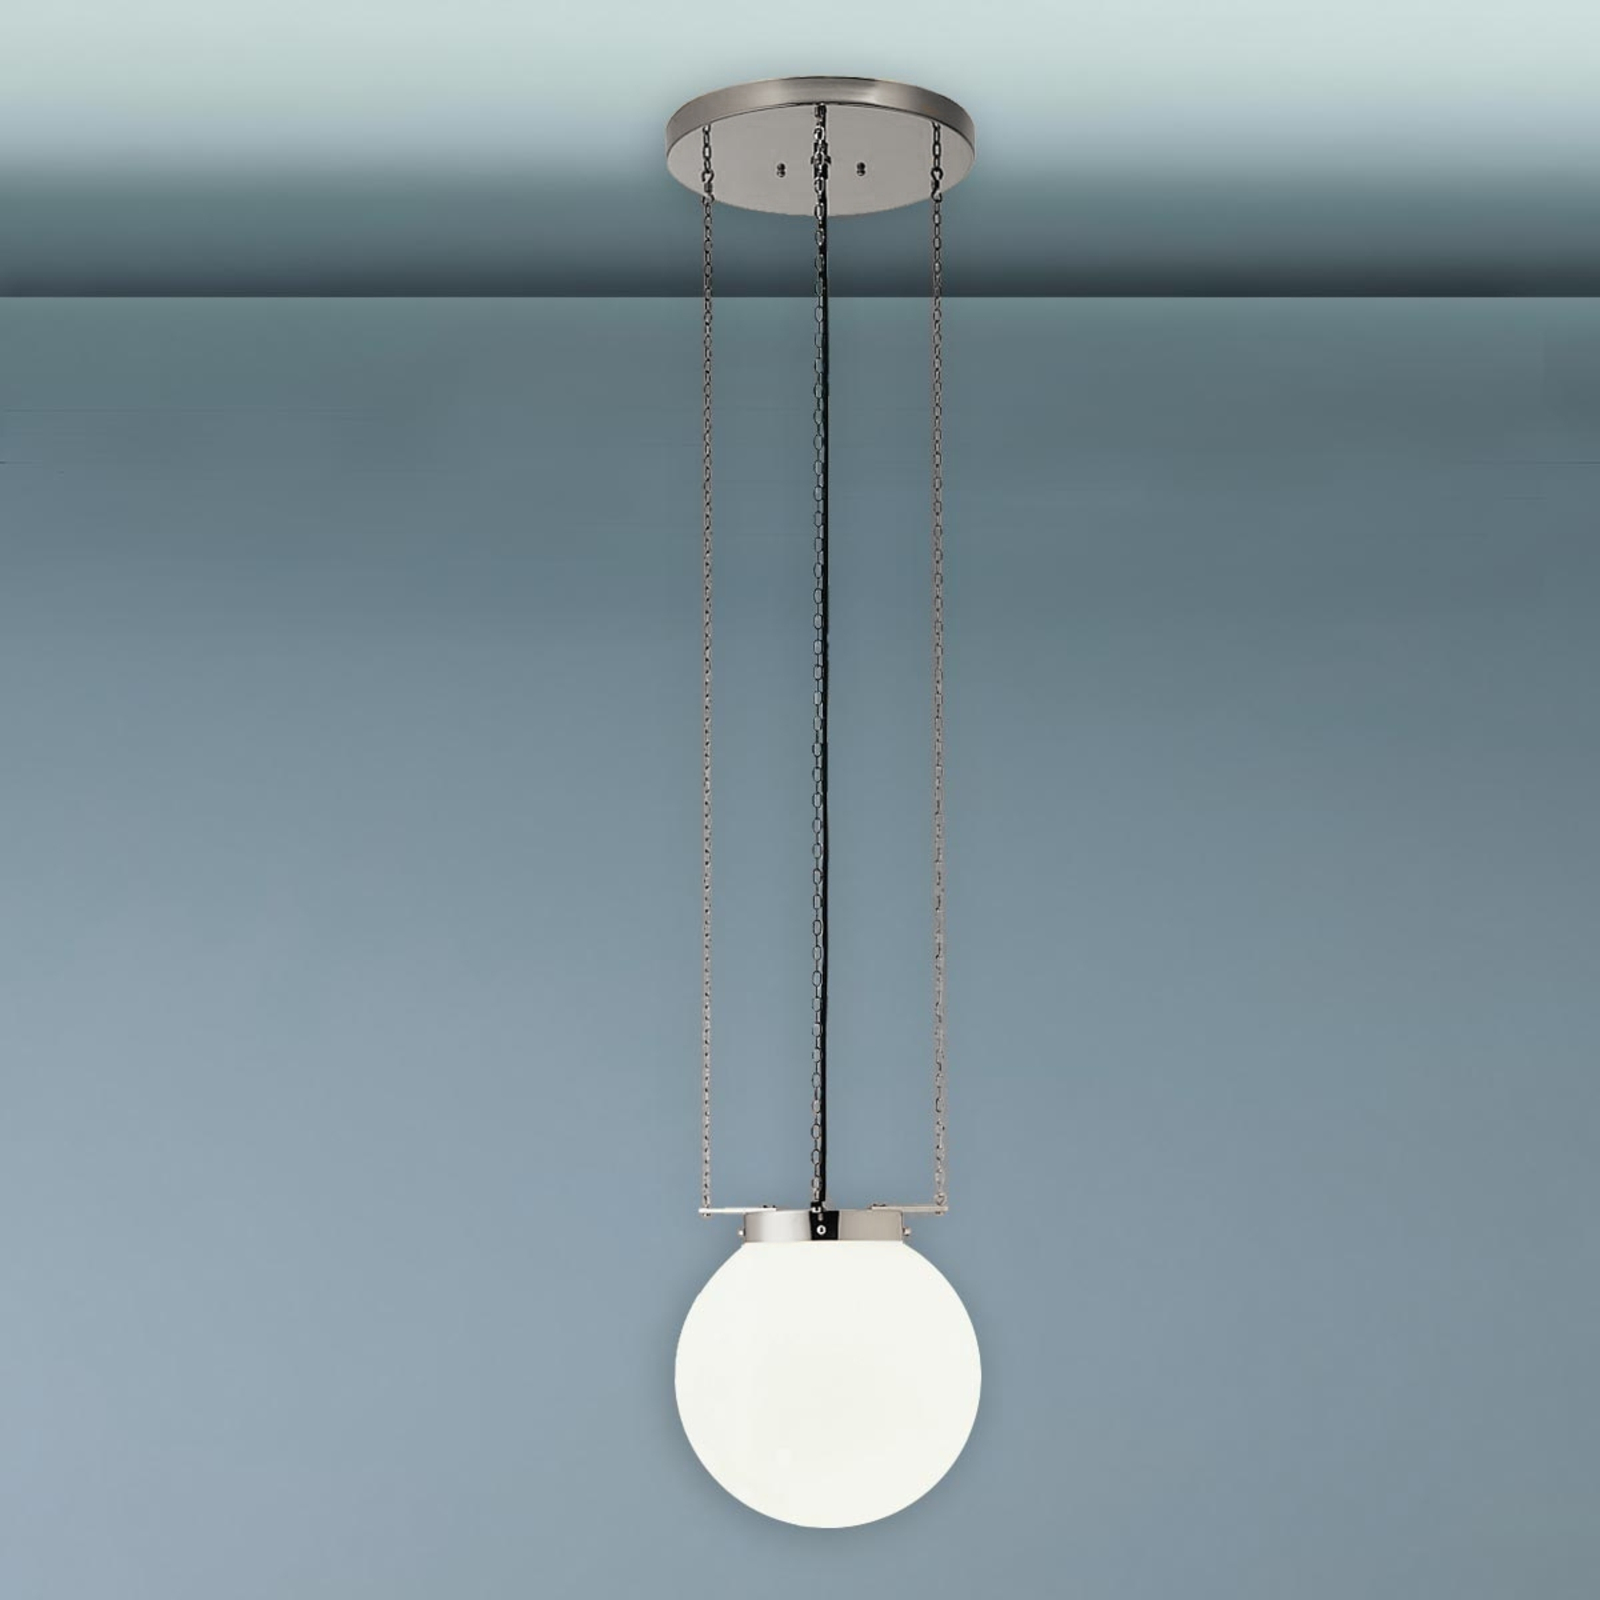 Hanging light in the Bauhaus style, nickel, 40 cm